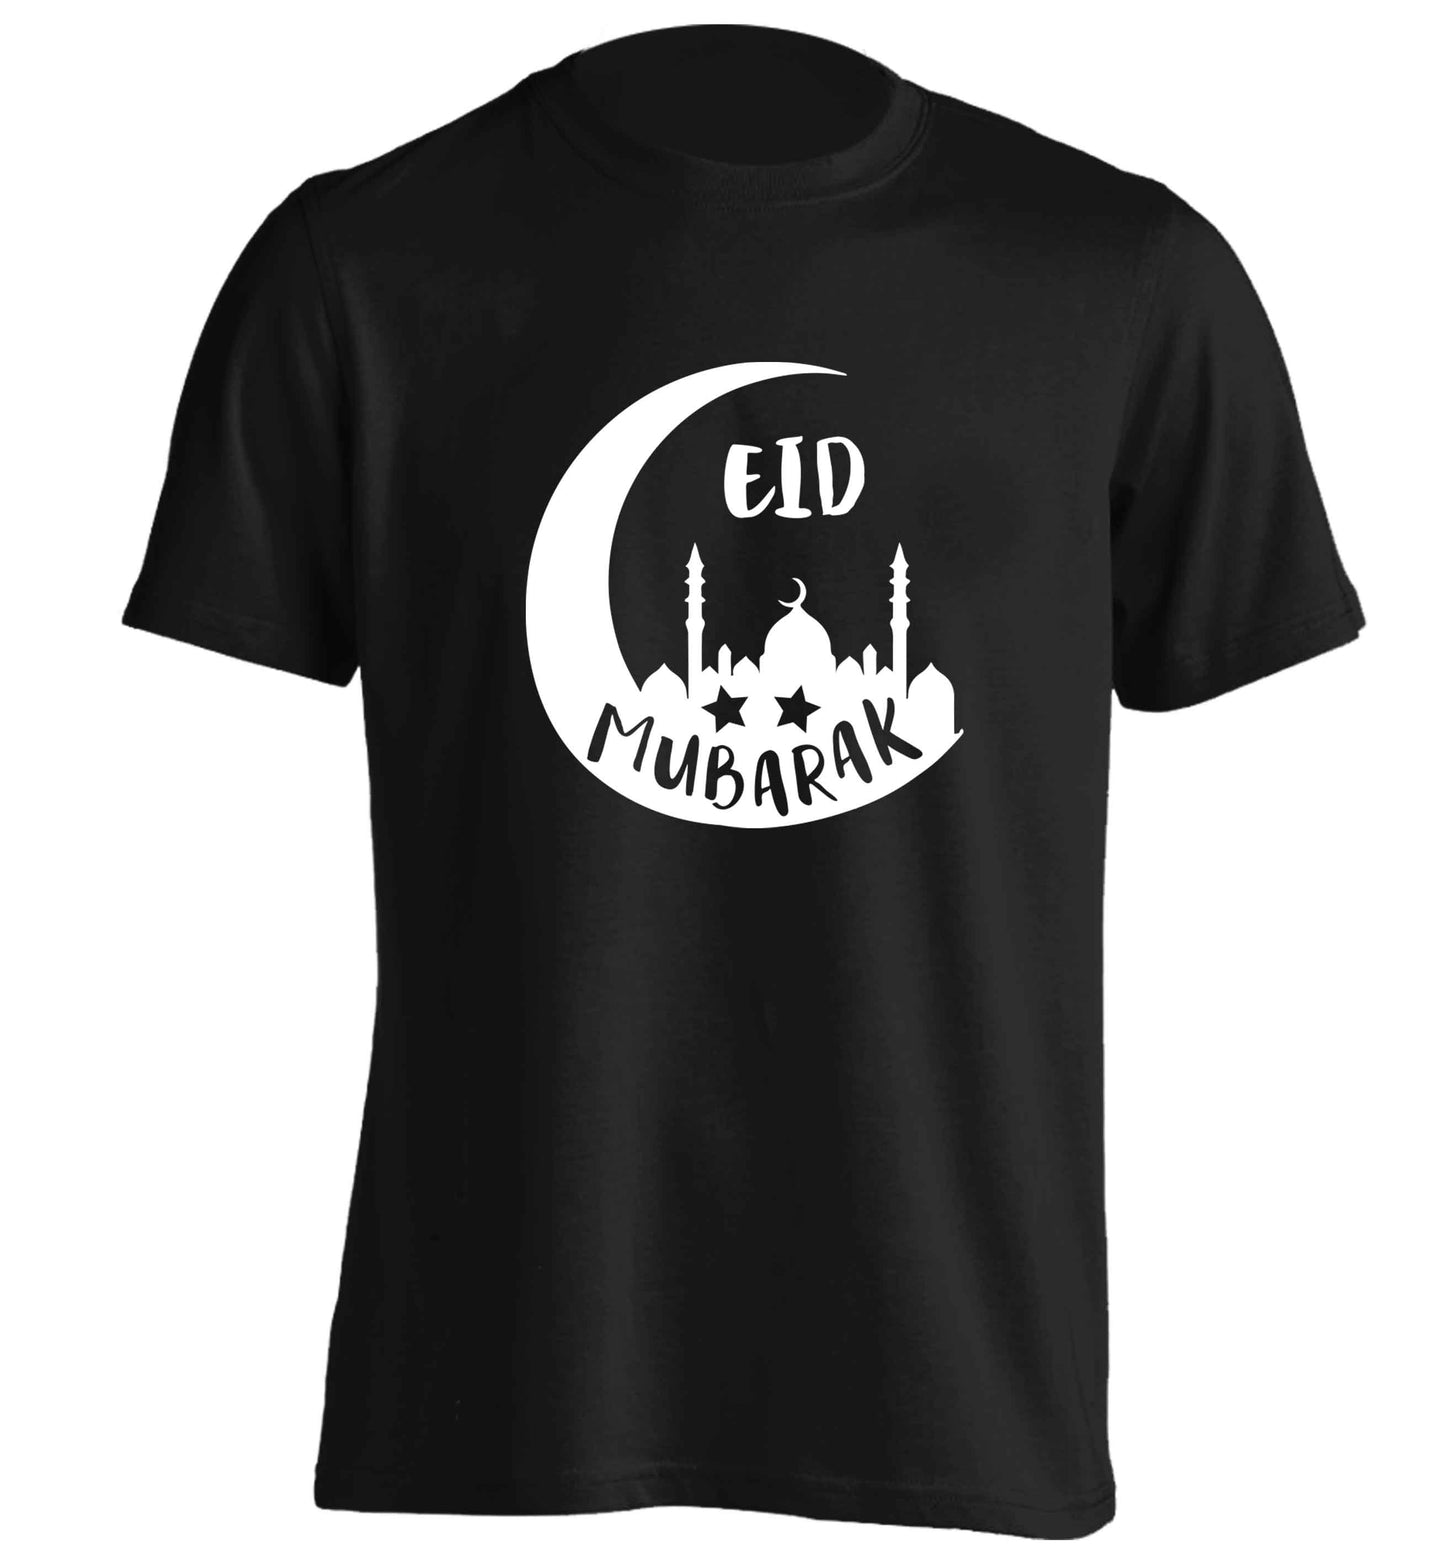 Eid mubarak adults unisex black Tshirt 2XL